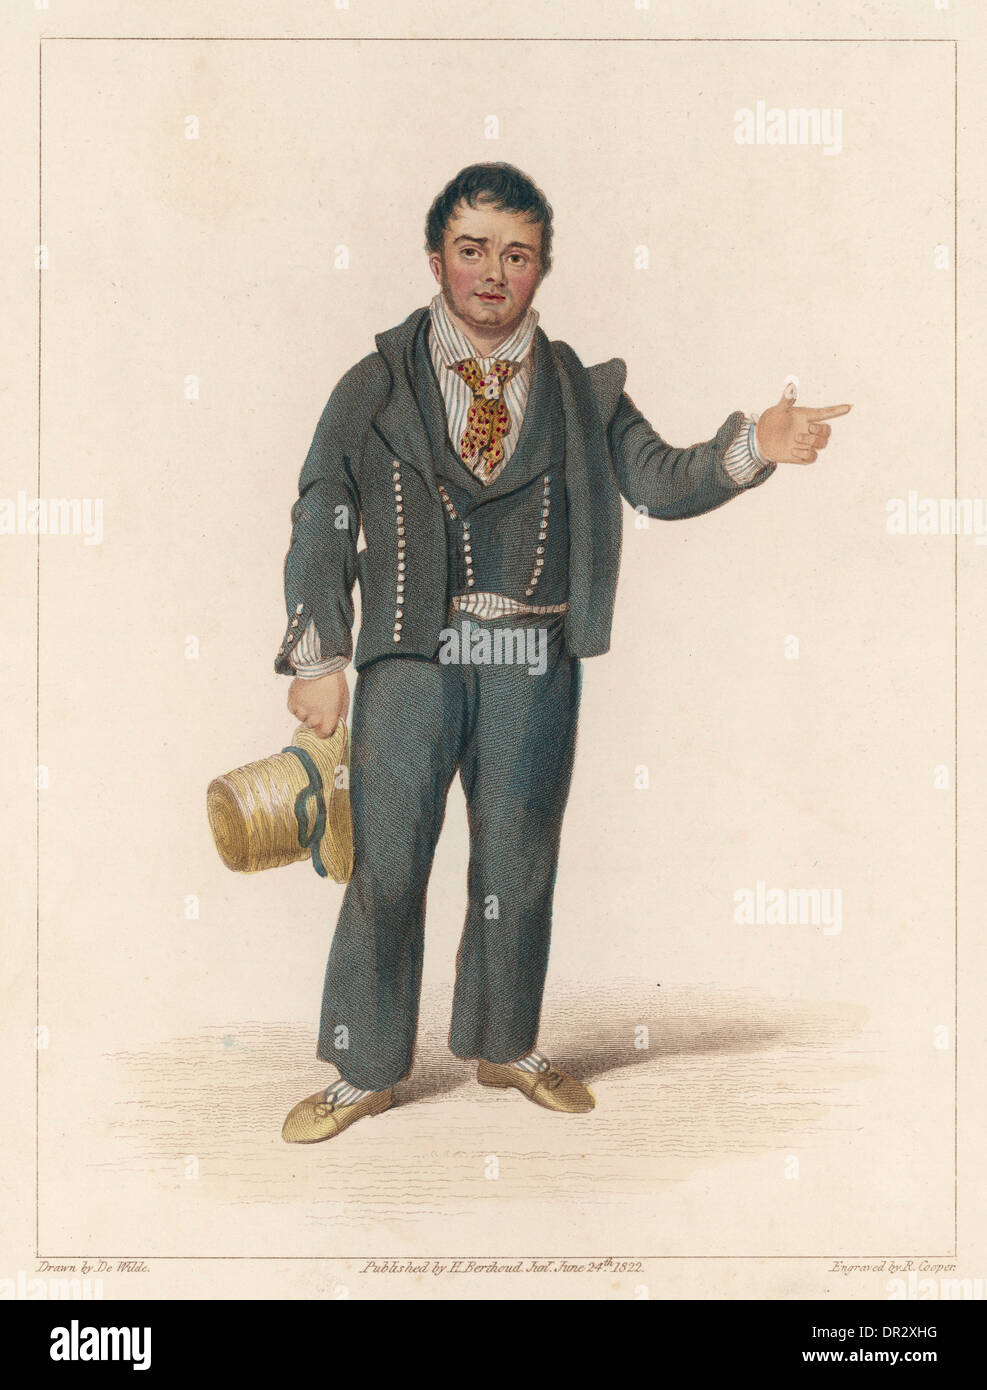 NAVY SEAMAN OF 1822 Stock Photo